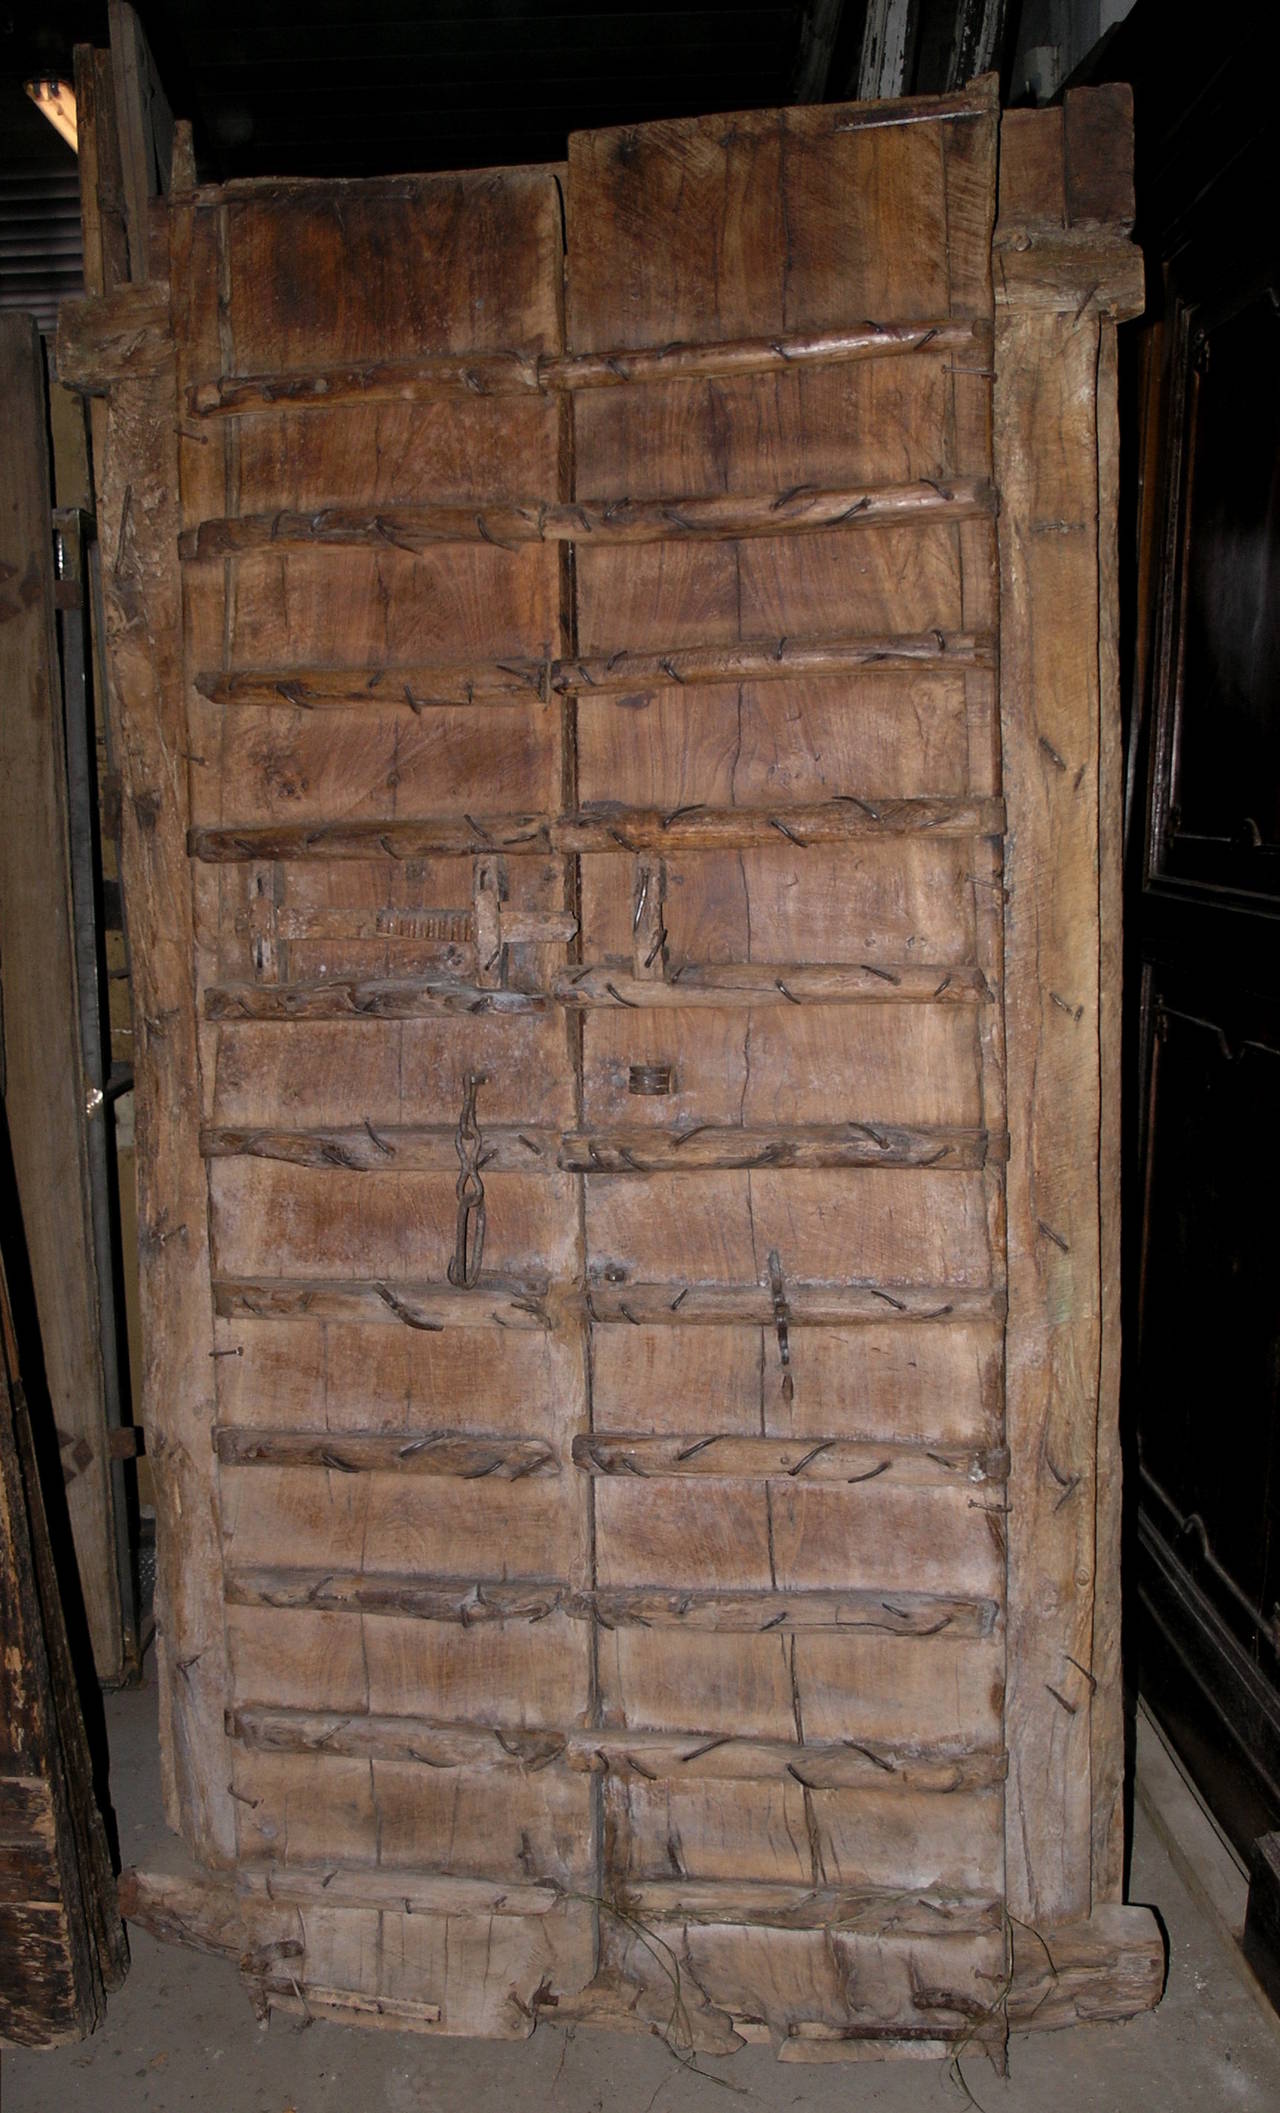 Antique door.
Comes from India.